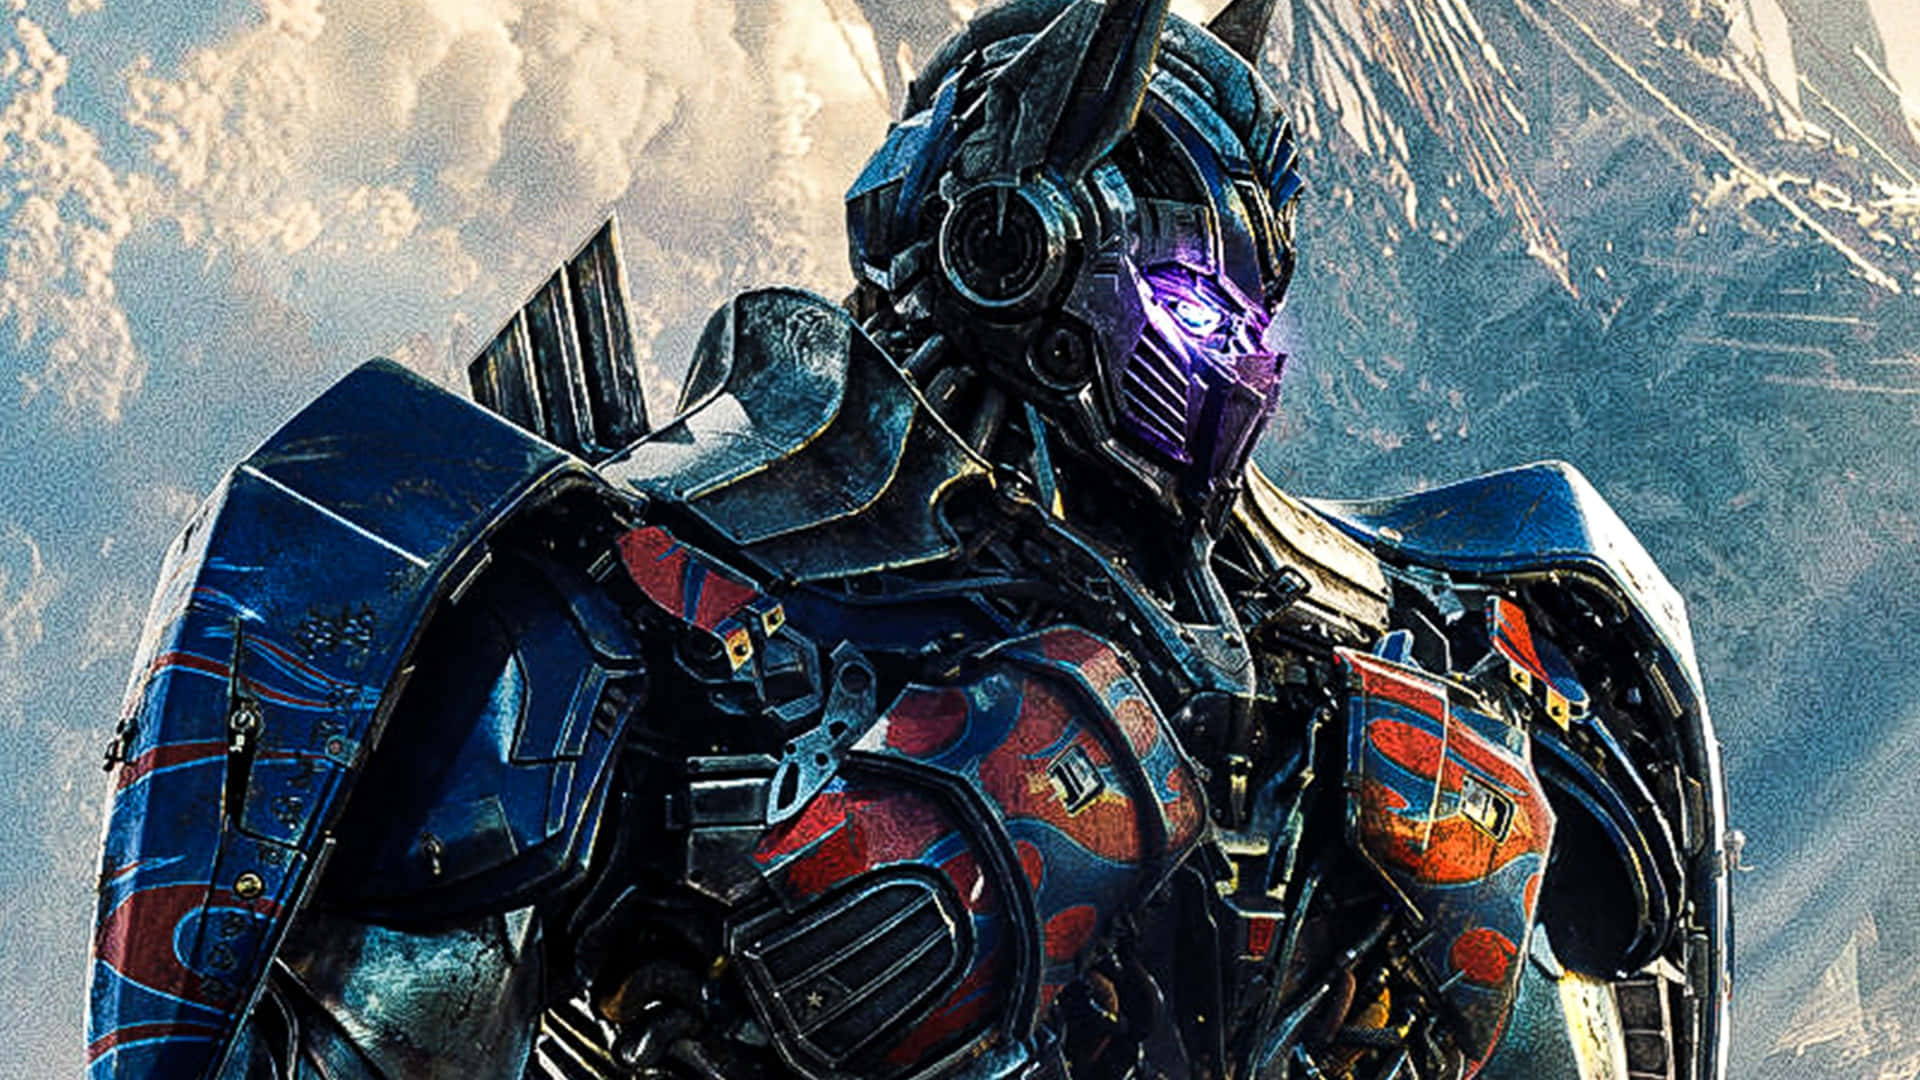 Transformers The Last Knight - Hd Wallpaper Wallpaper